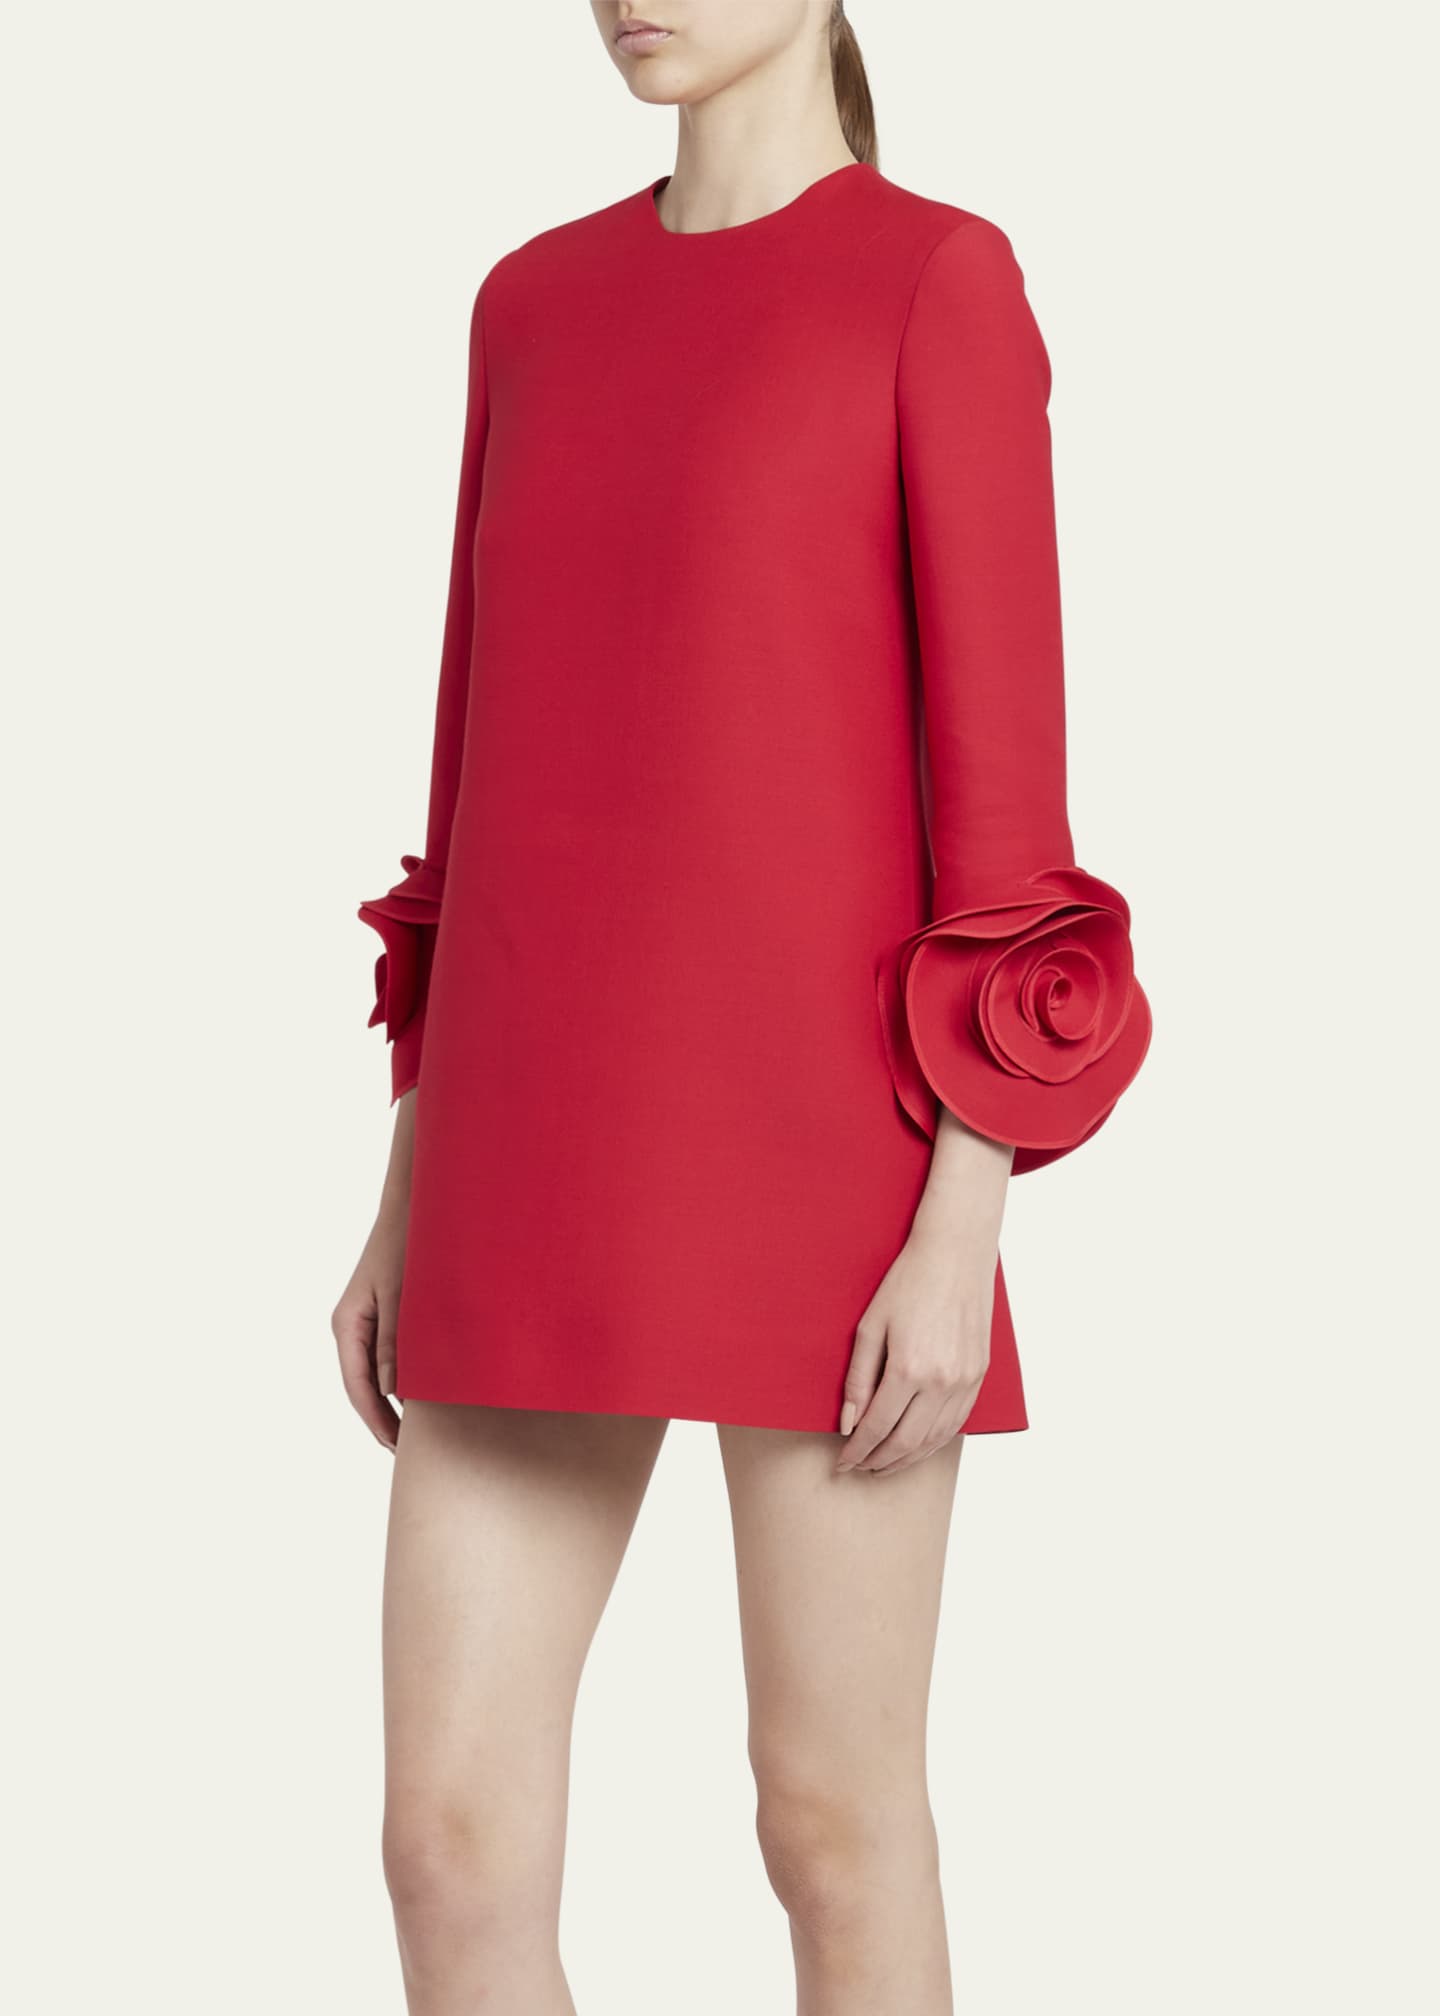 Valentino dress シルクウール size 40 - ワンピース